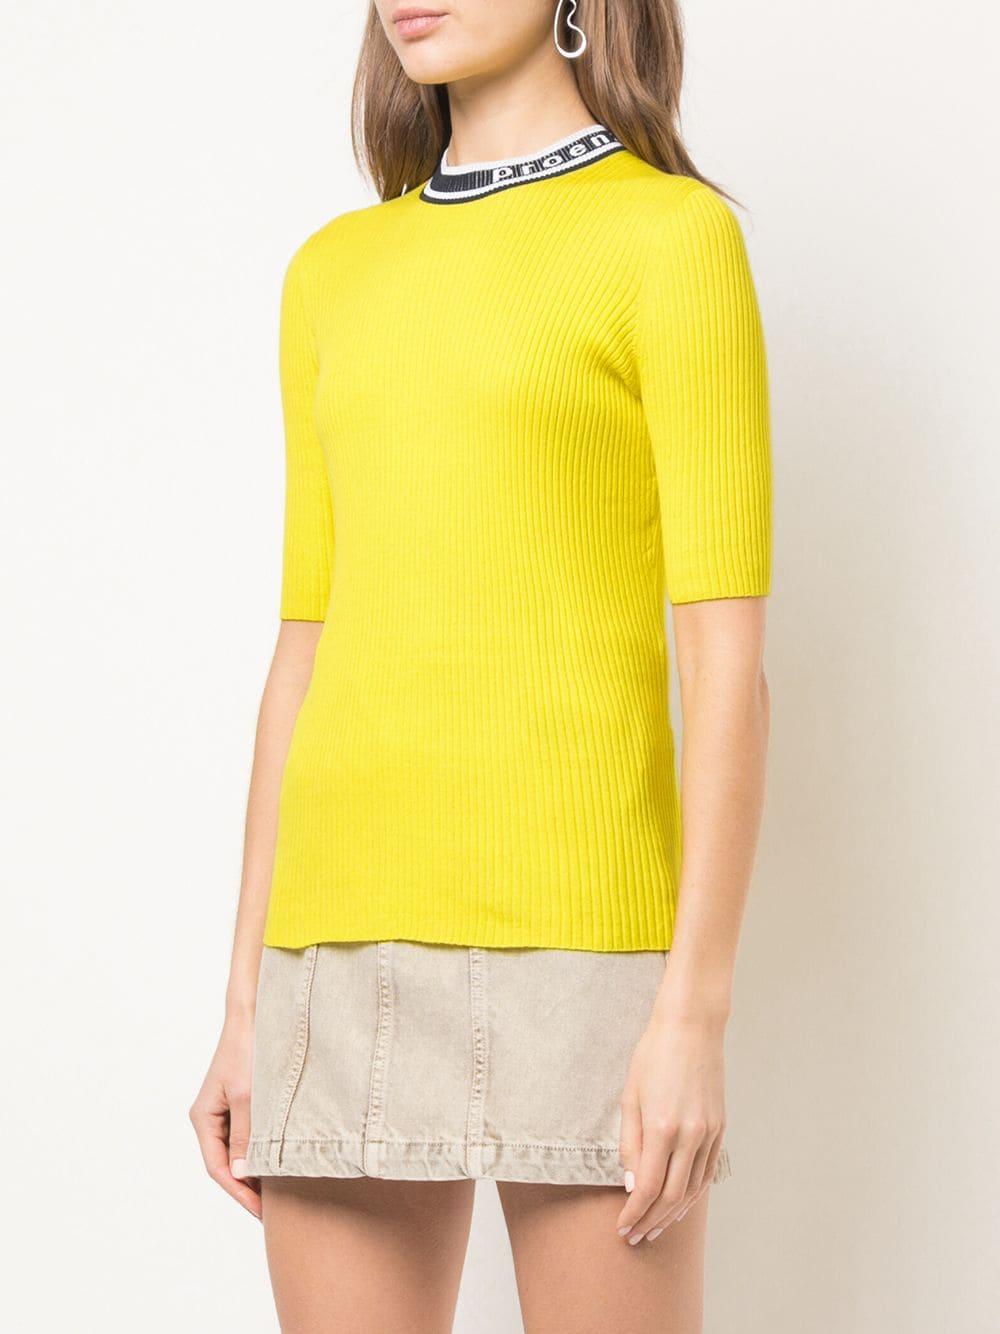 Proenza Schouler Pswl Logo Knit Short Sleeve Crewneck Top in Yellow - Lyst